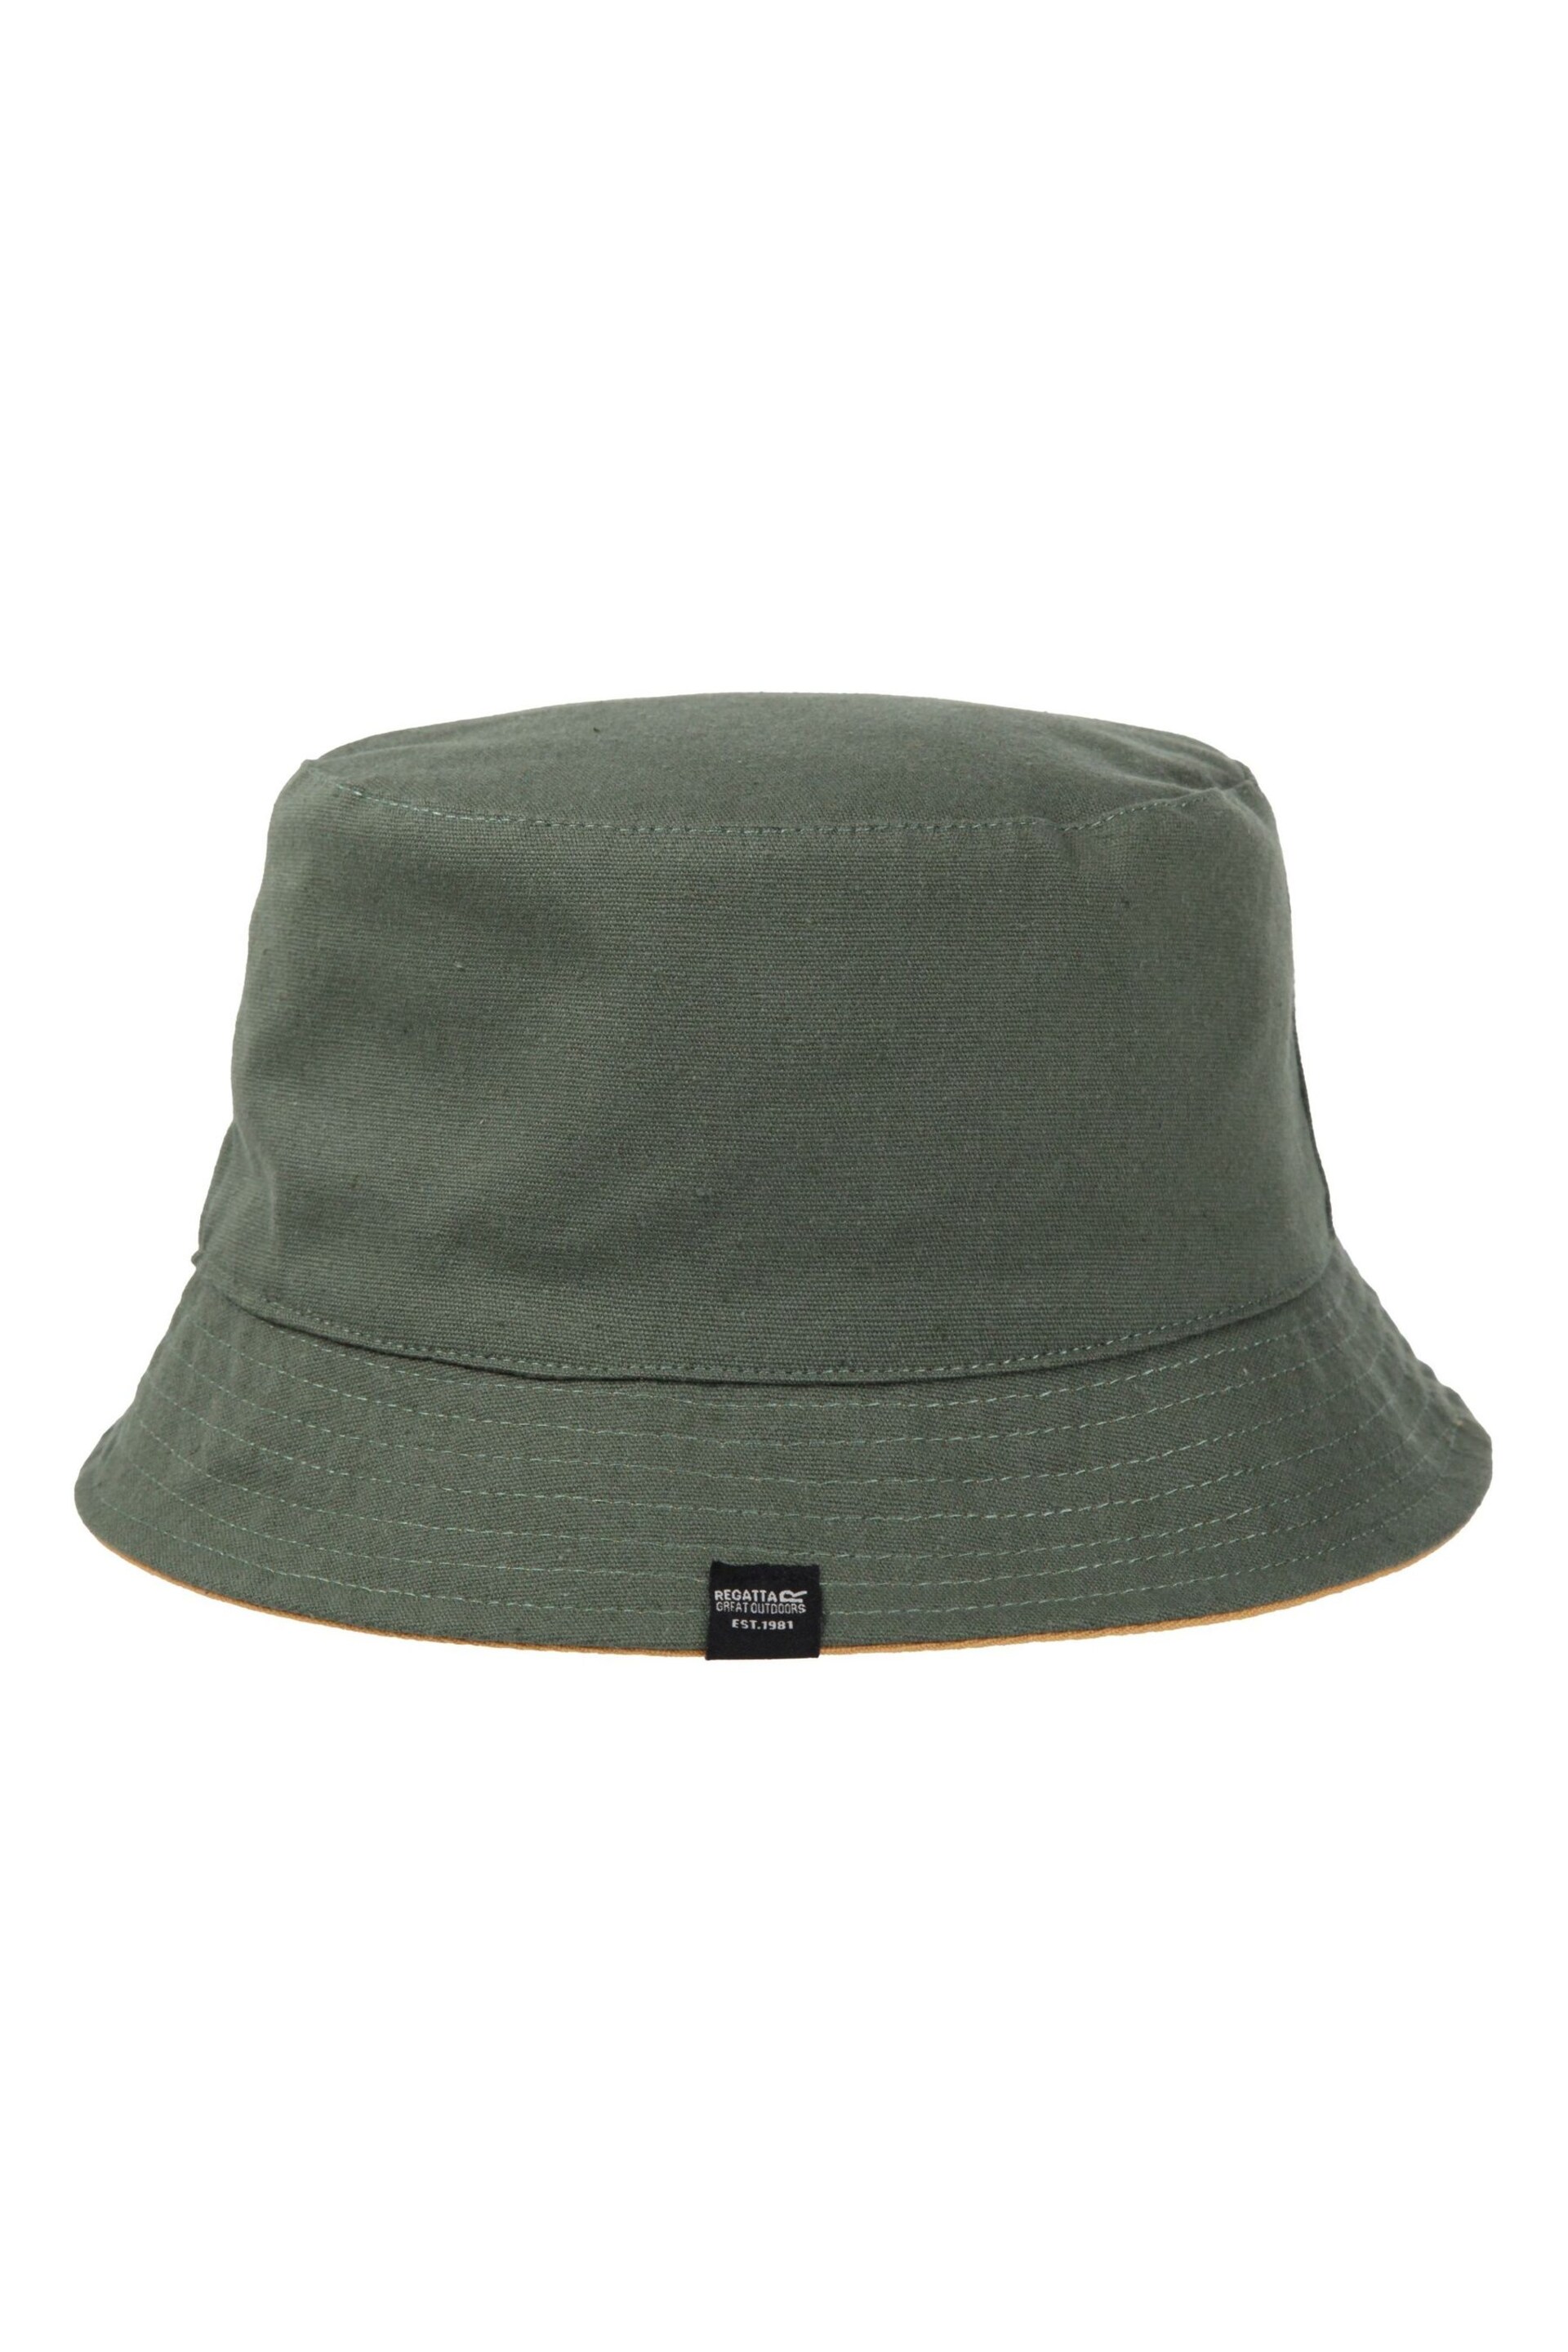 Regatta Green Camdyn Reversible Hat - Image 2 of 2